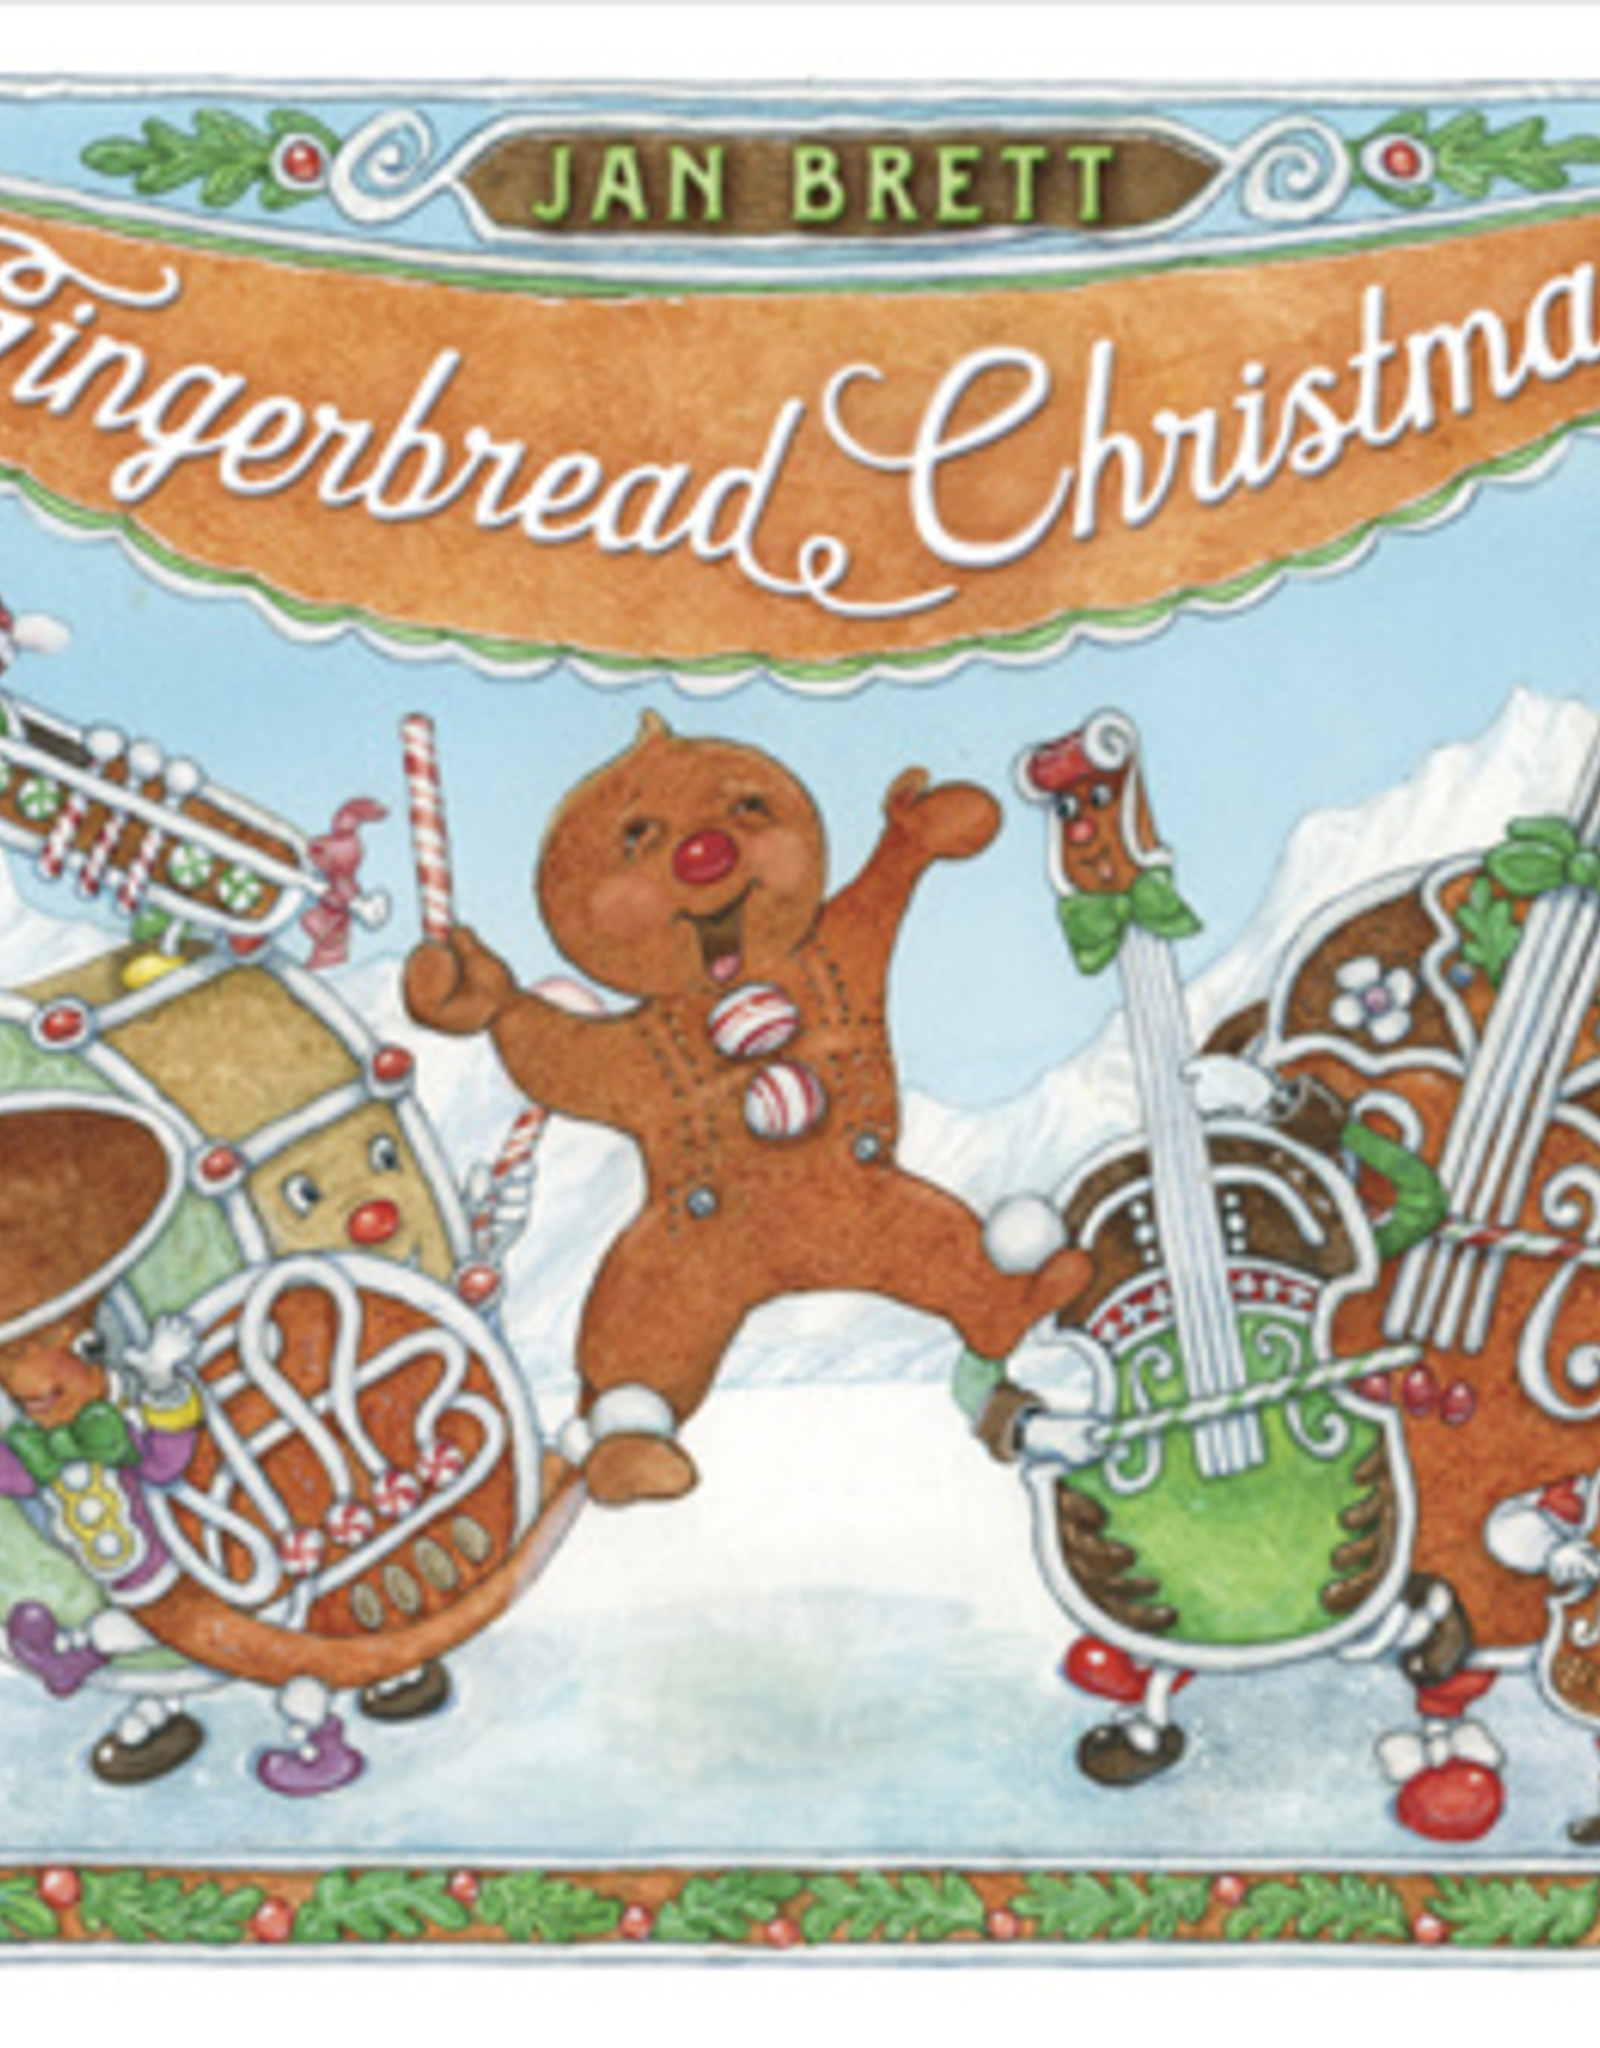 Random House/Penguin Gingerbread Christmas